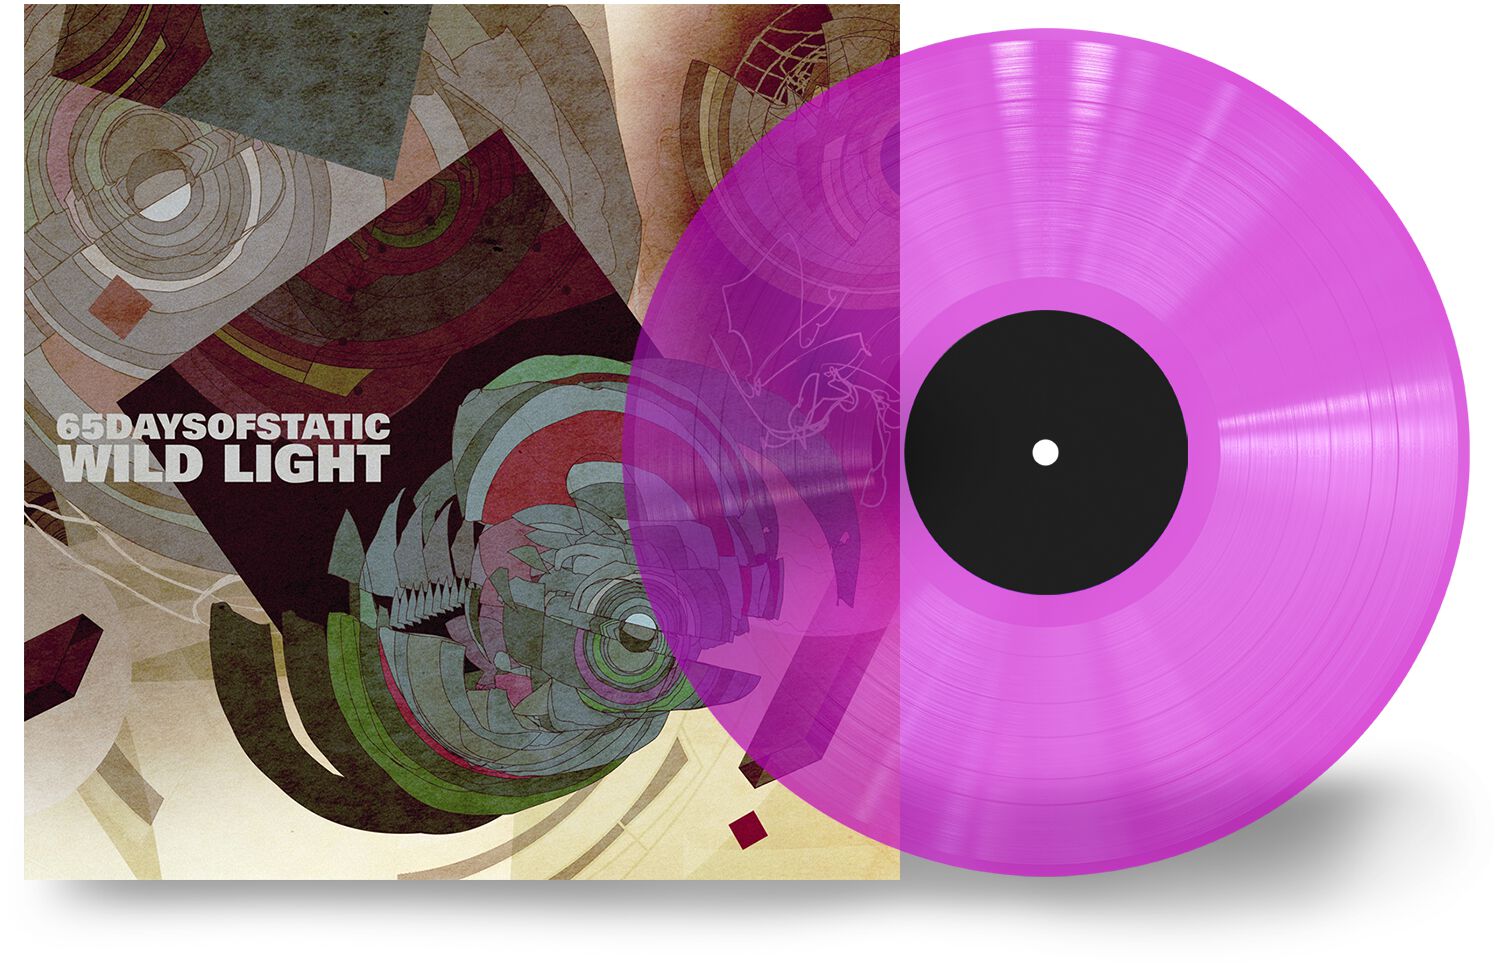 65daysofstatic - Wild Light [Transparent Magenta Vinyl]